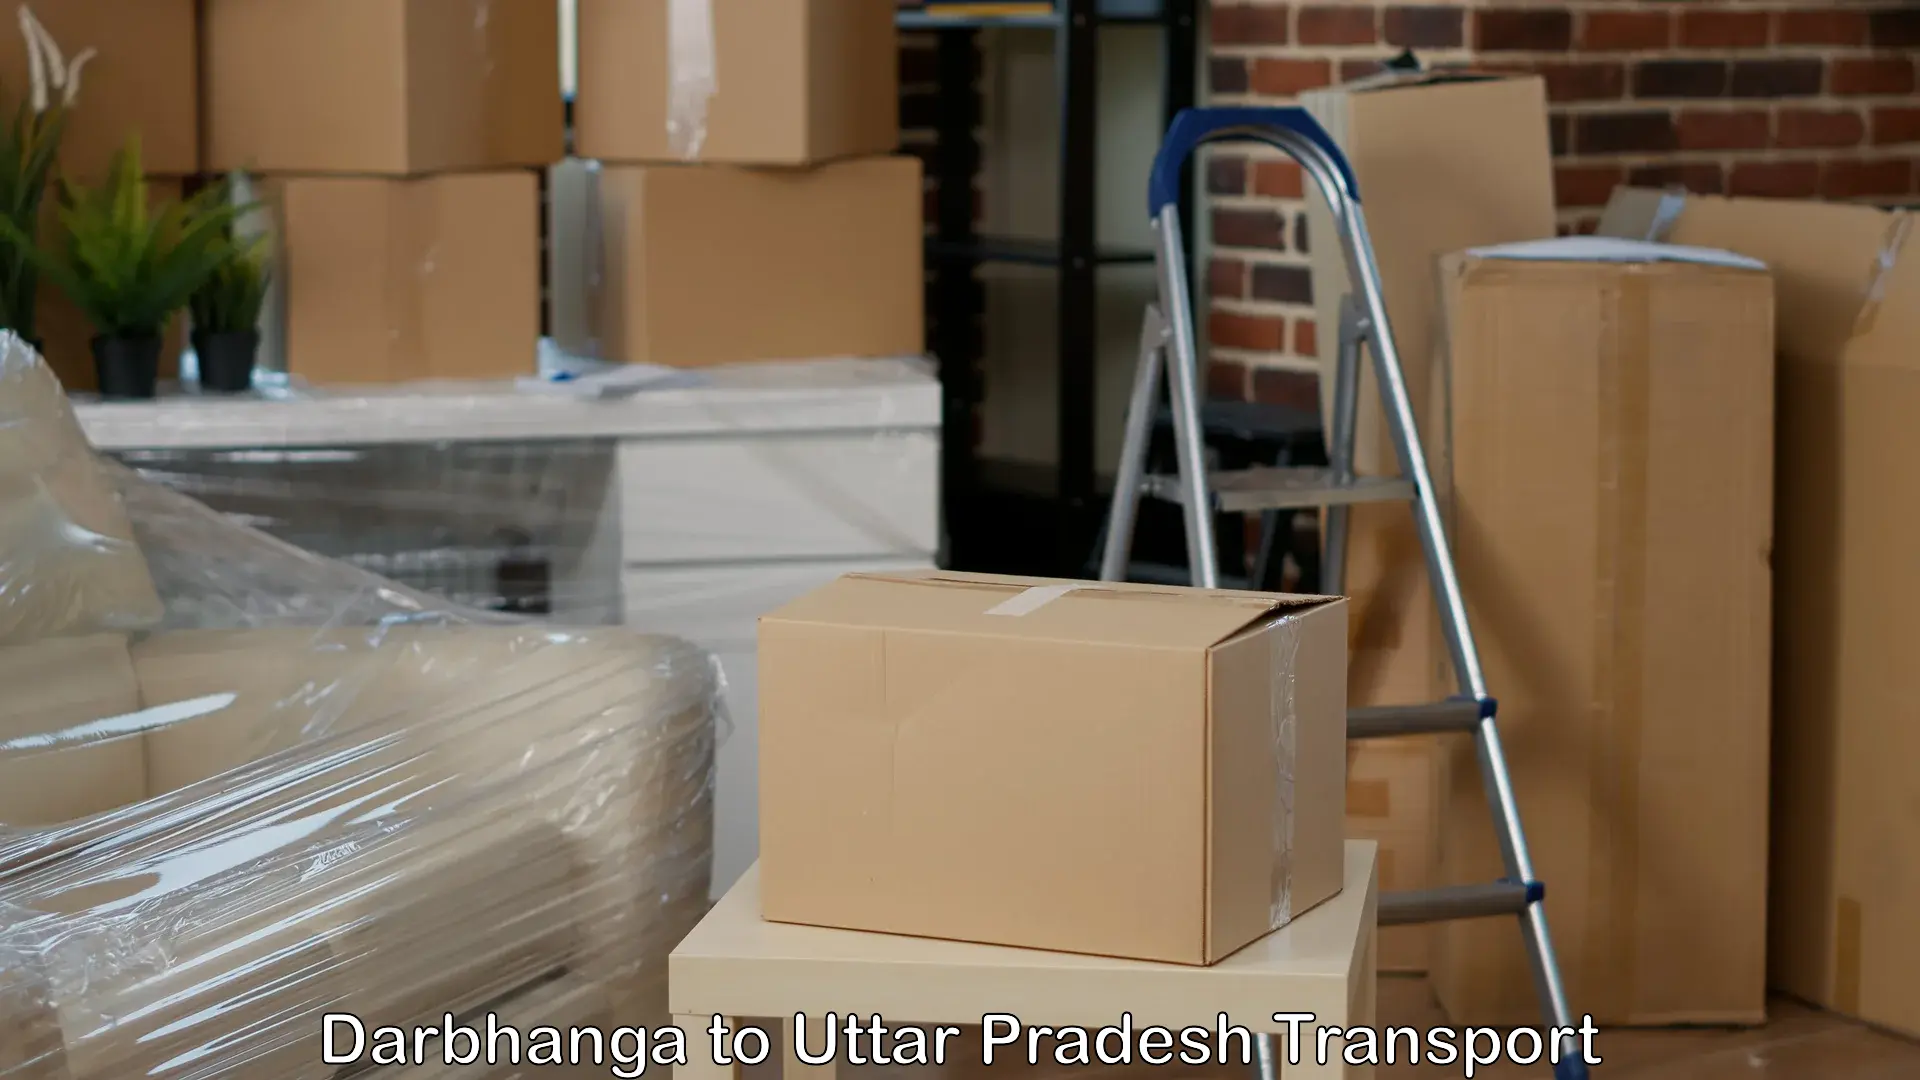 Truck transport companies in India Darbhanga to Meerut